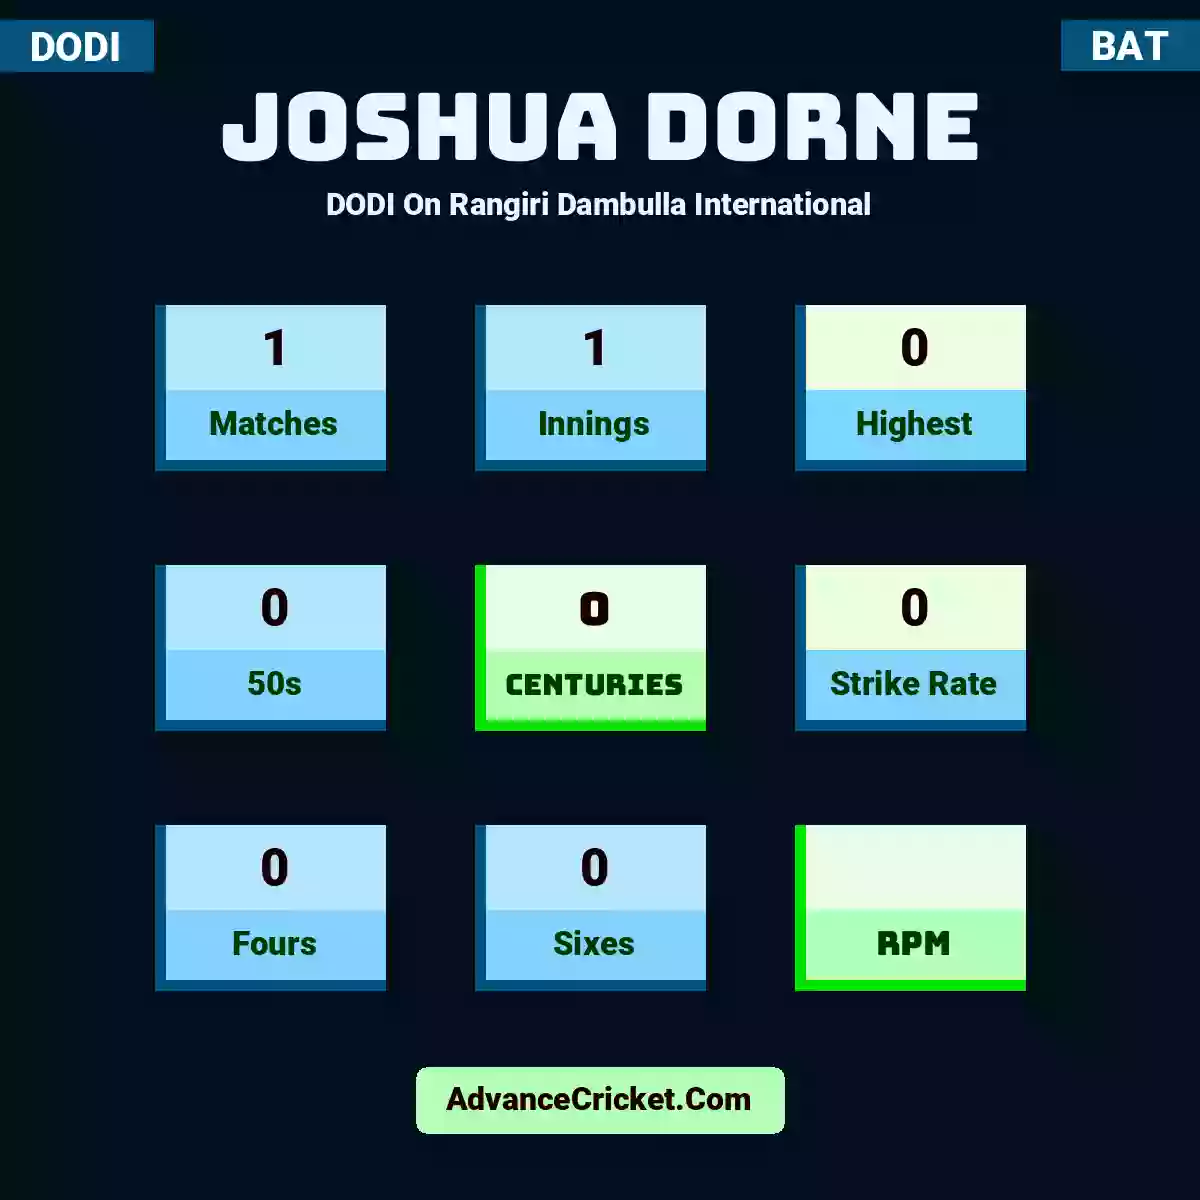 Joshua Dorne DODI  On Rangiri Dambulla International, Joshua Dorne played 1 matches, scored 0 runs as highest, 0 half-centuries, and 0 centuries, with a strike rate of 0. J.Dorne hit 0 fours and 0 sixes.